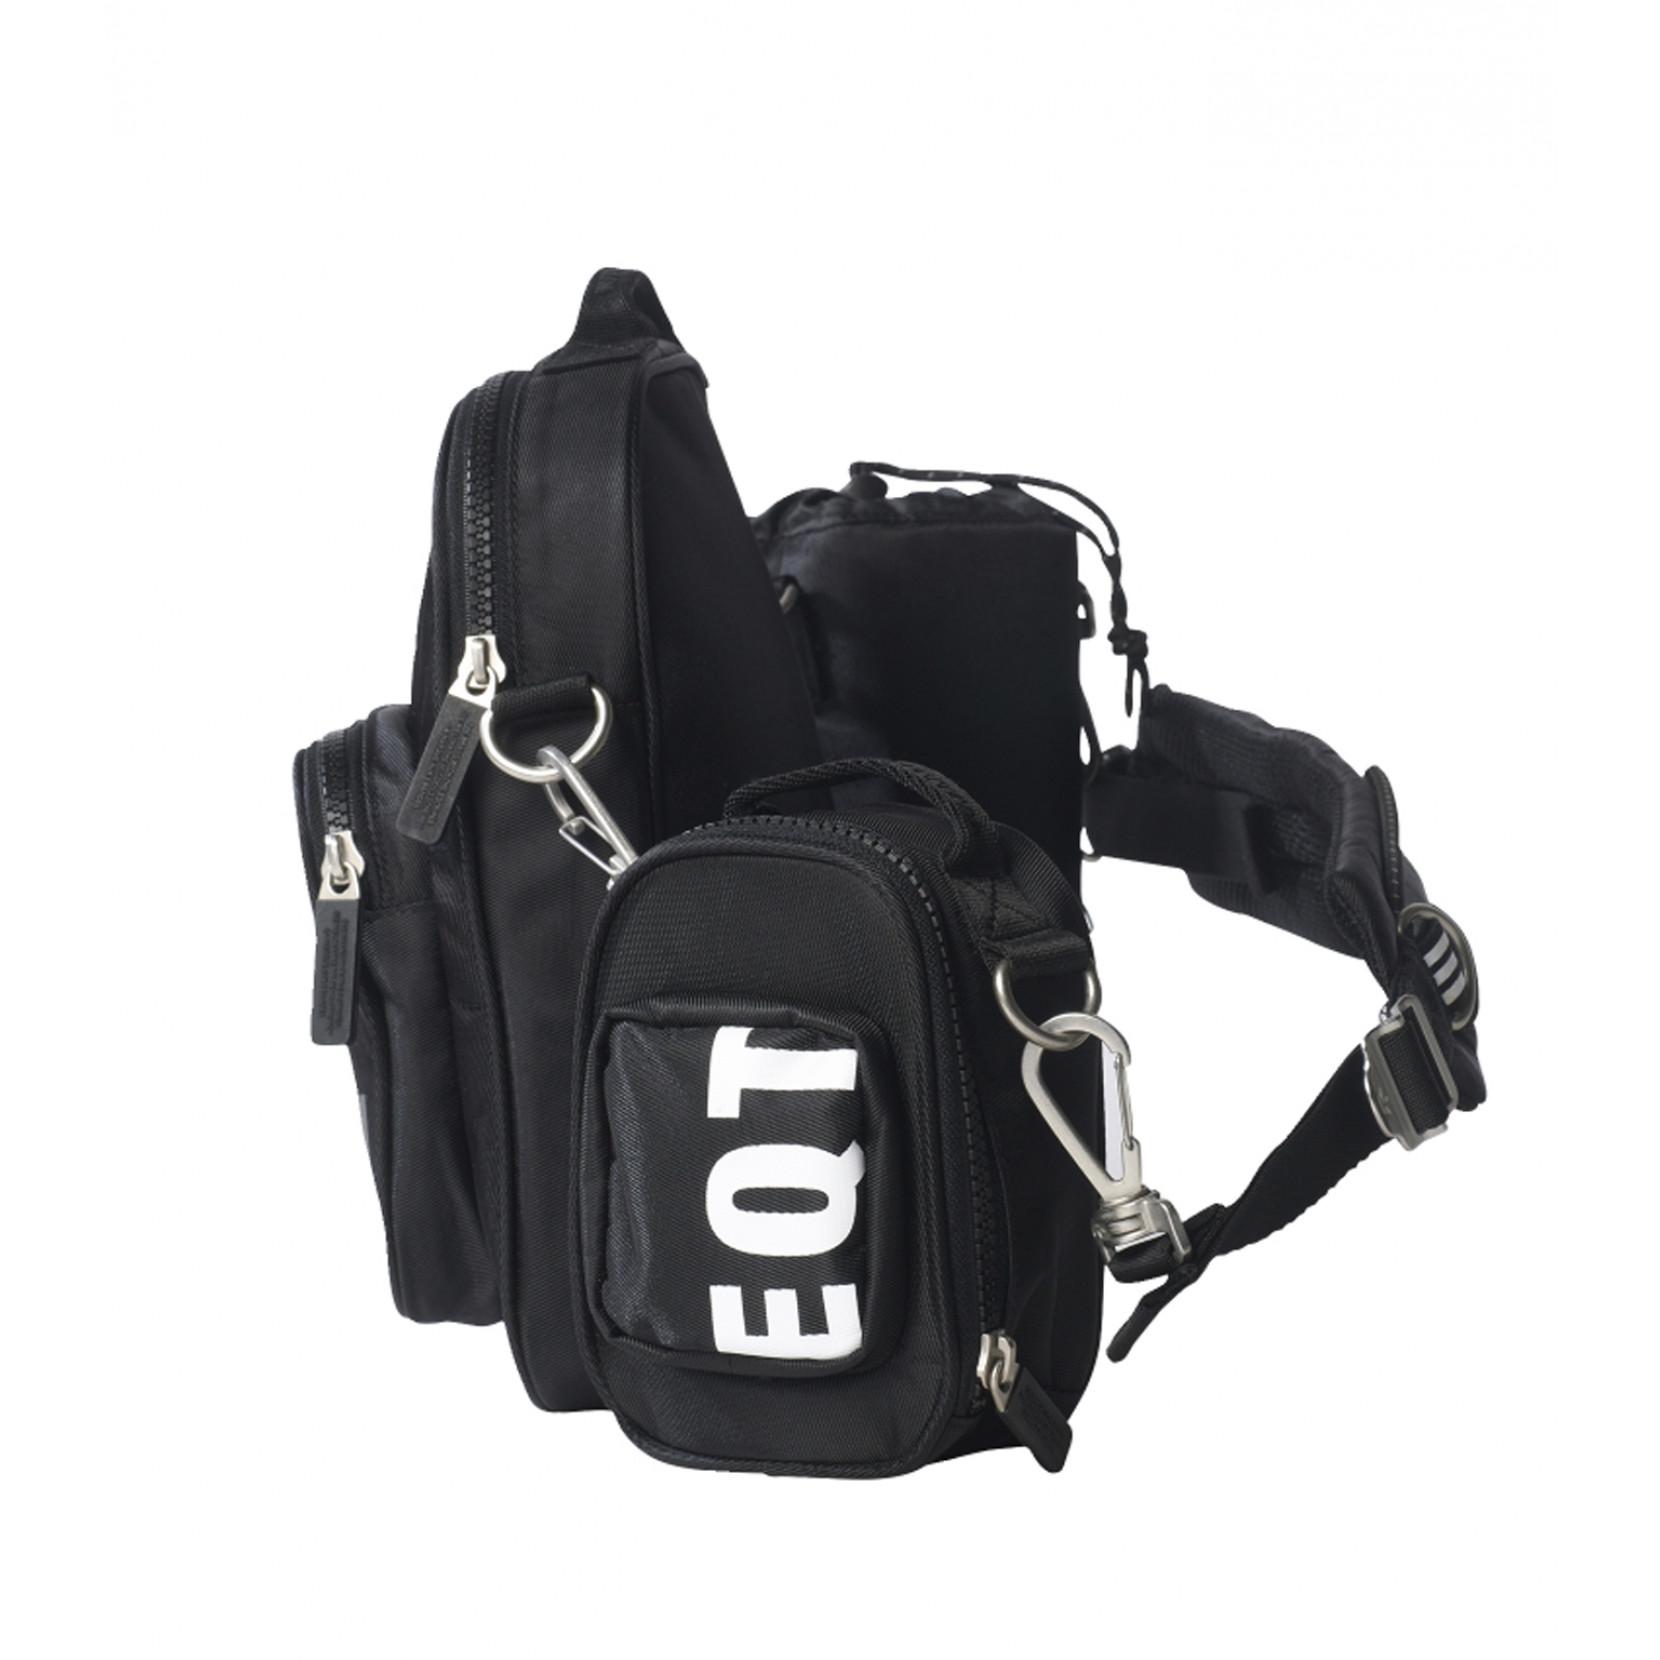 adidas Eqt Utility Bag in Black for Men - Lyst